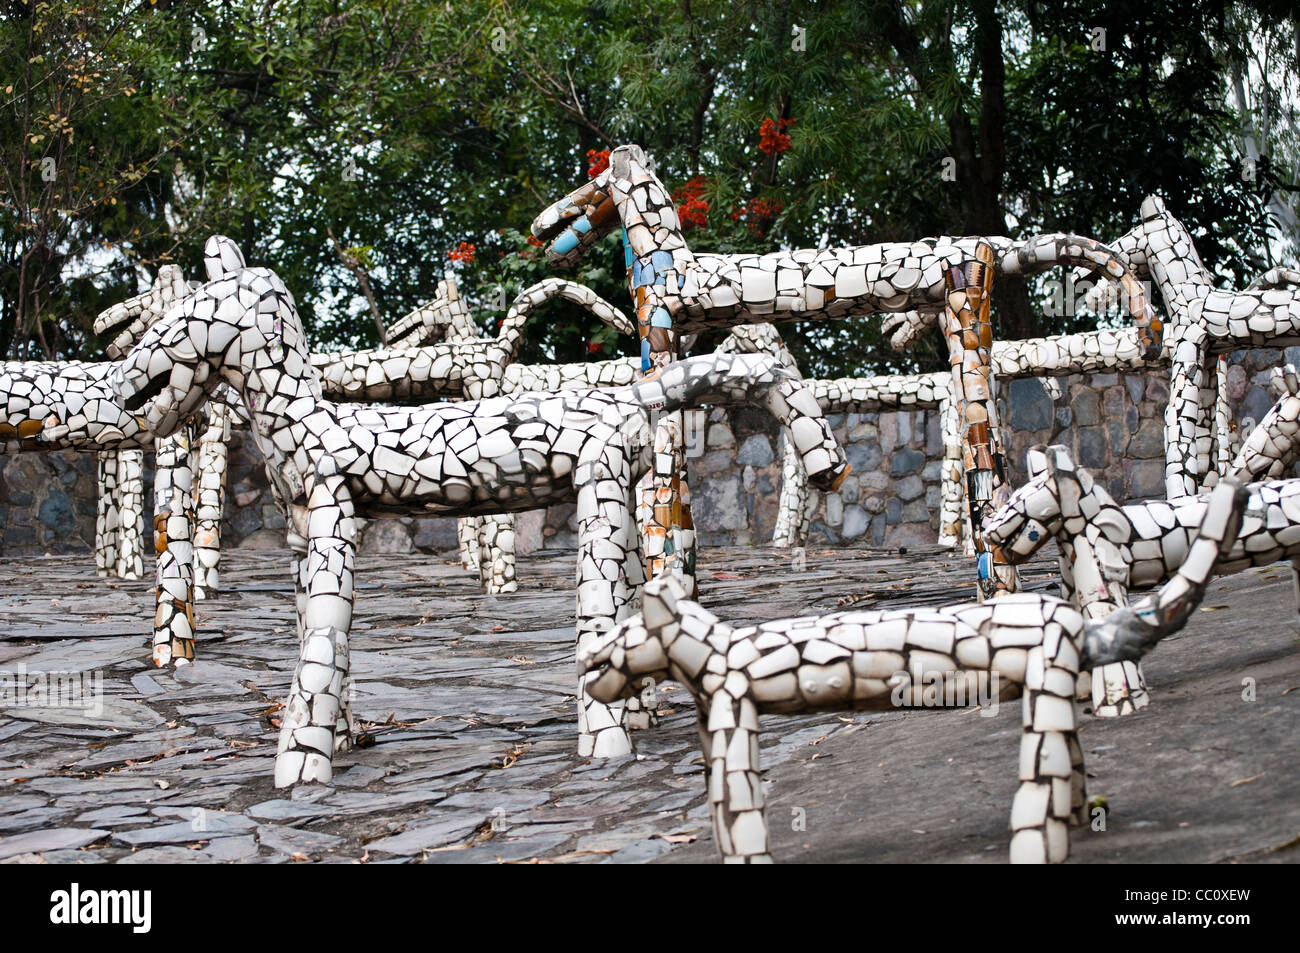 Sculptures Rock Garden By Nek Chand Chandigarh India Stock